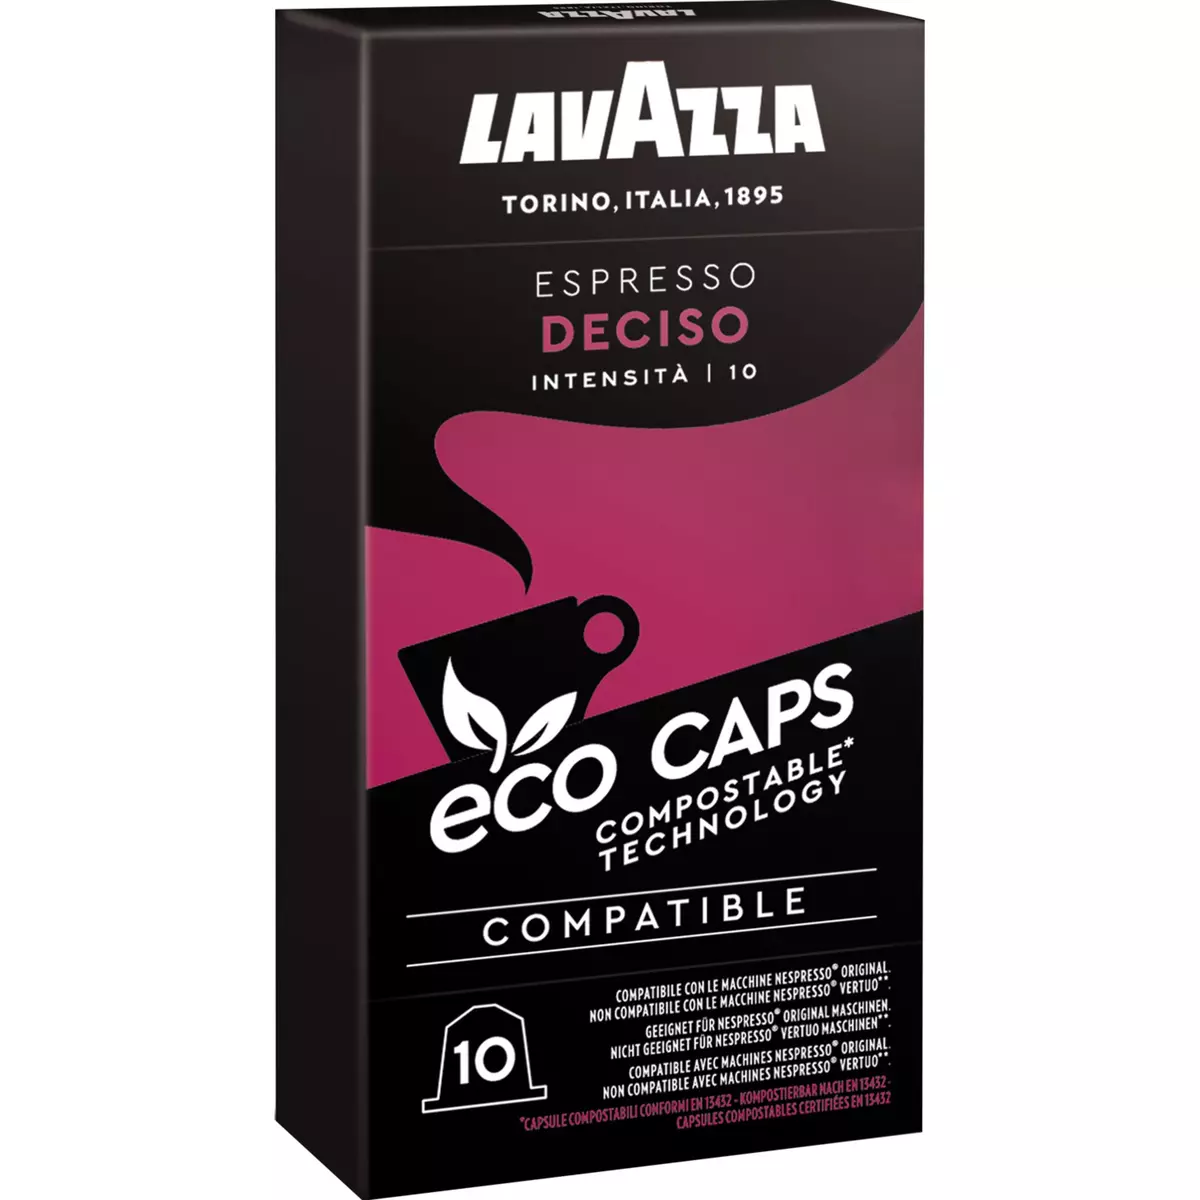 LAVAZZA Capsules de café deciso intensité 10 compatibles Nespresso 10 capsules 53g